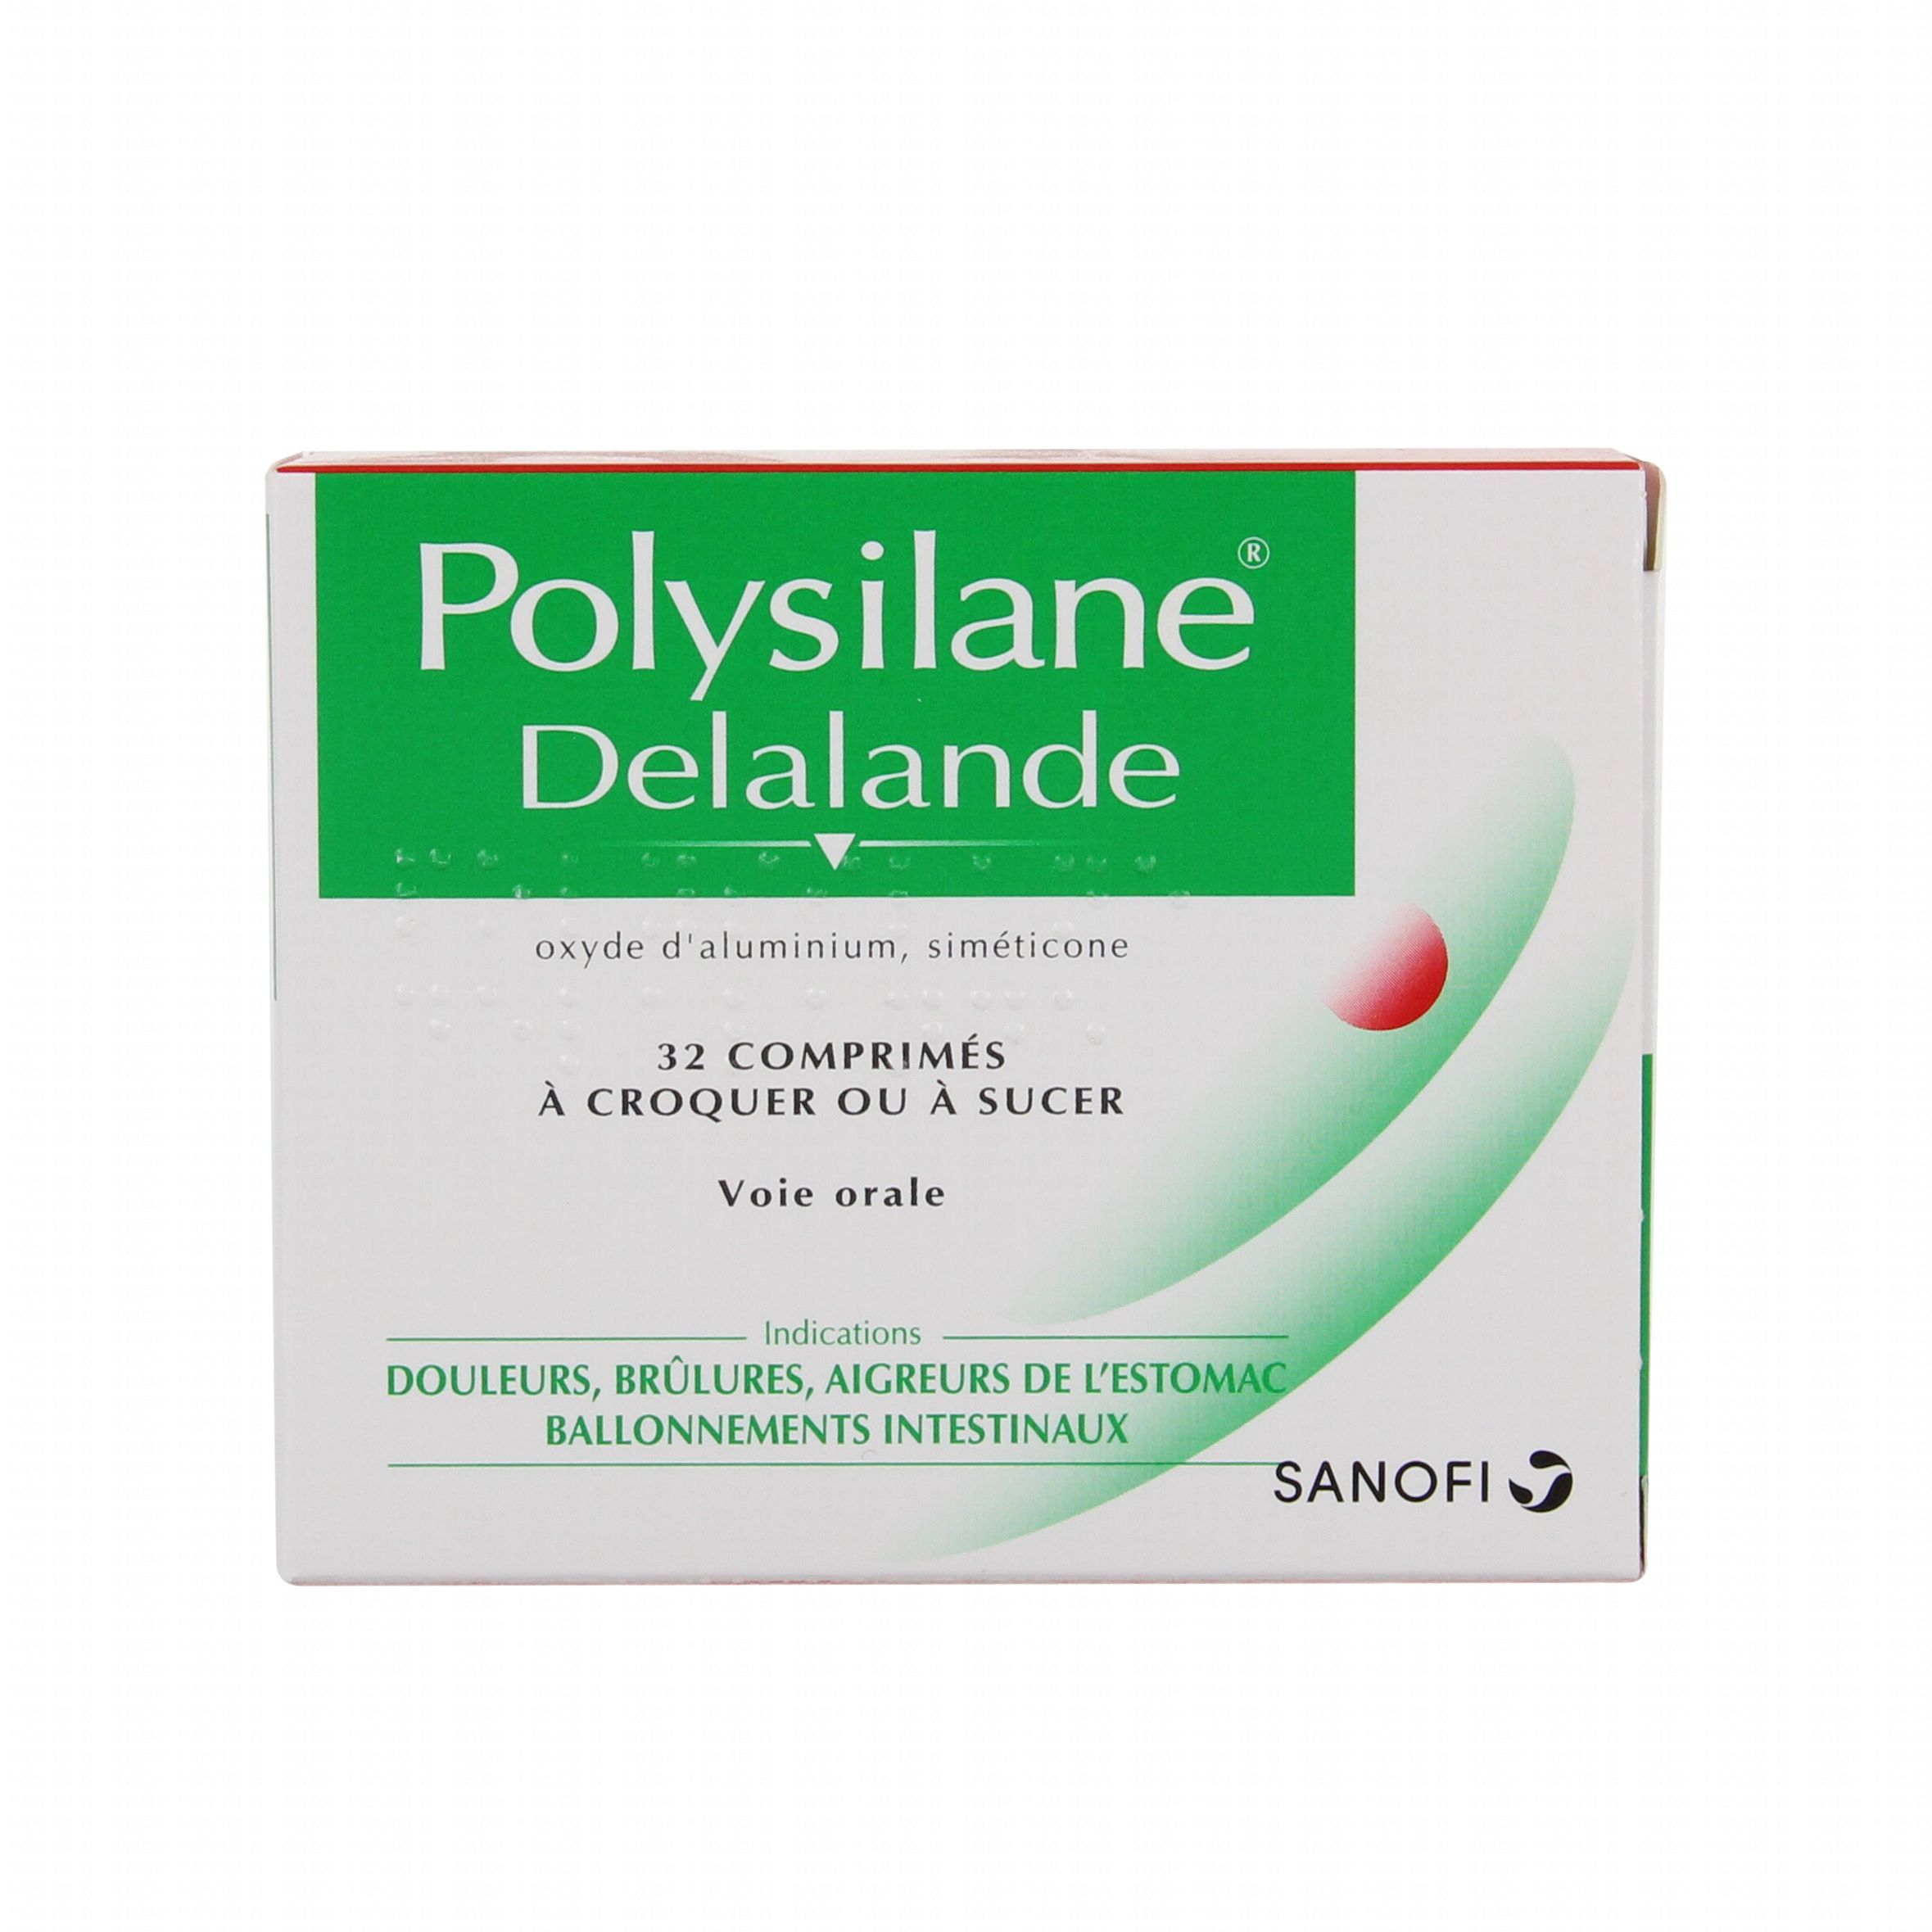 Doxycycline 100 mg tablet online